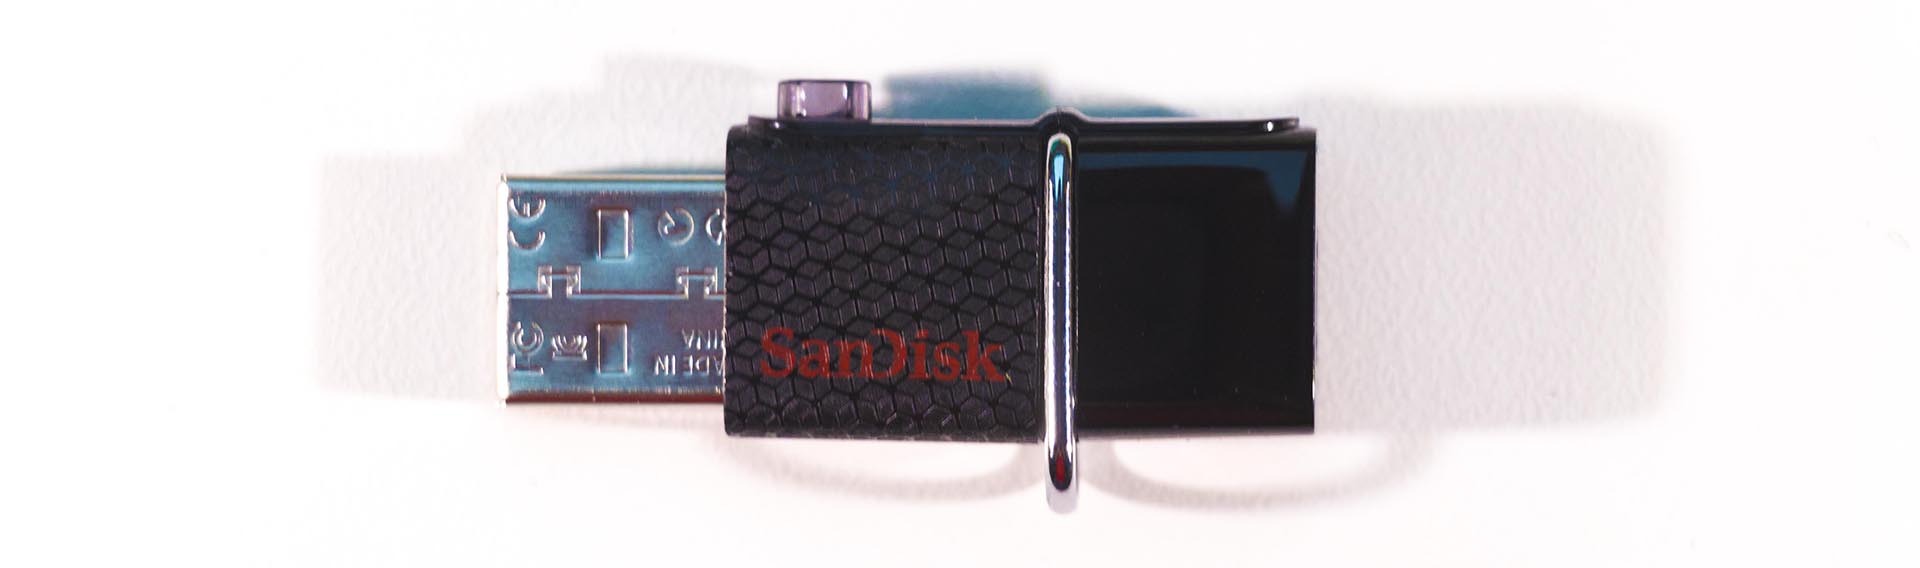 SanDisk Ultra Dual USB Drive 3.0 _MG_8358